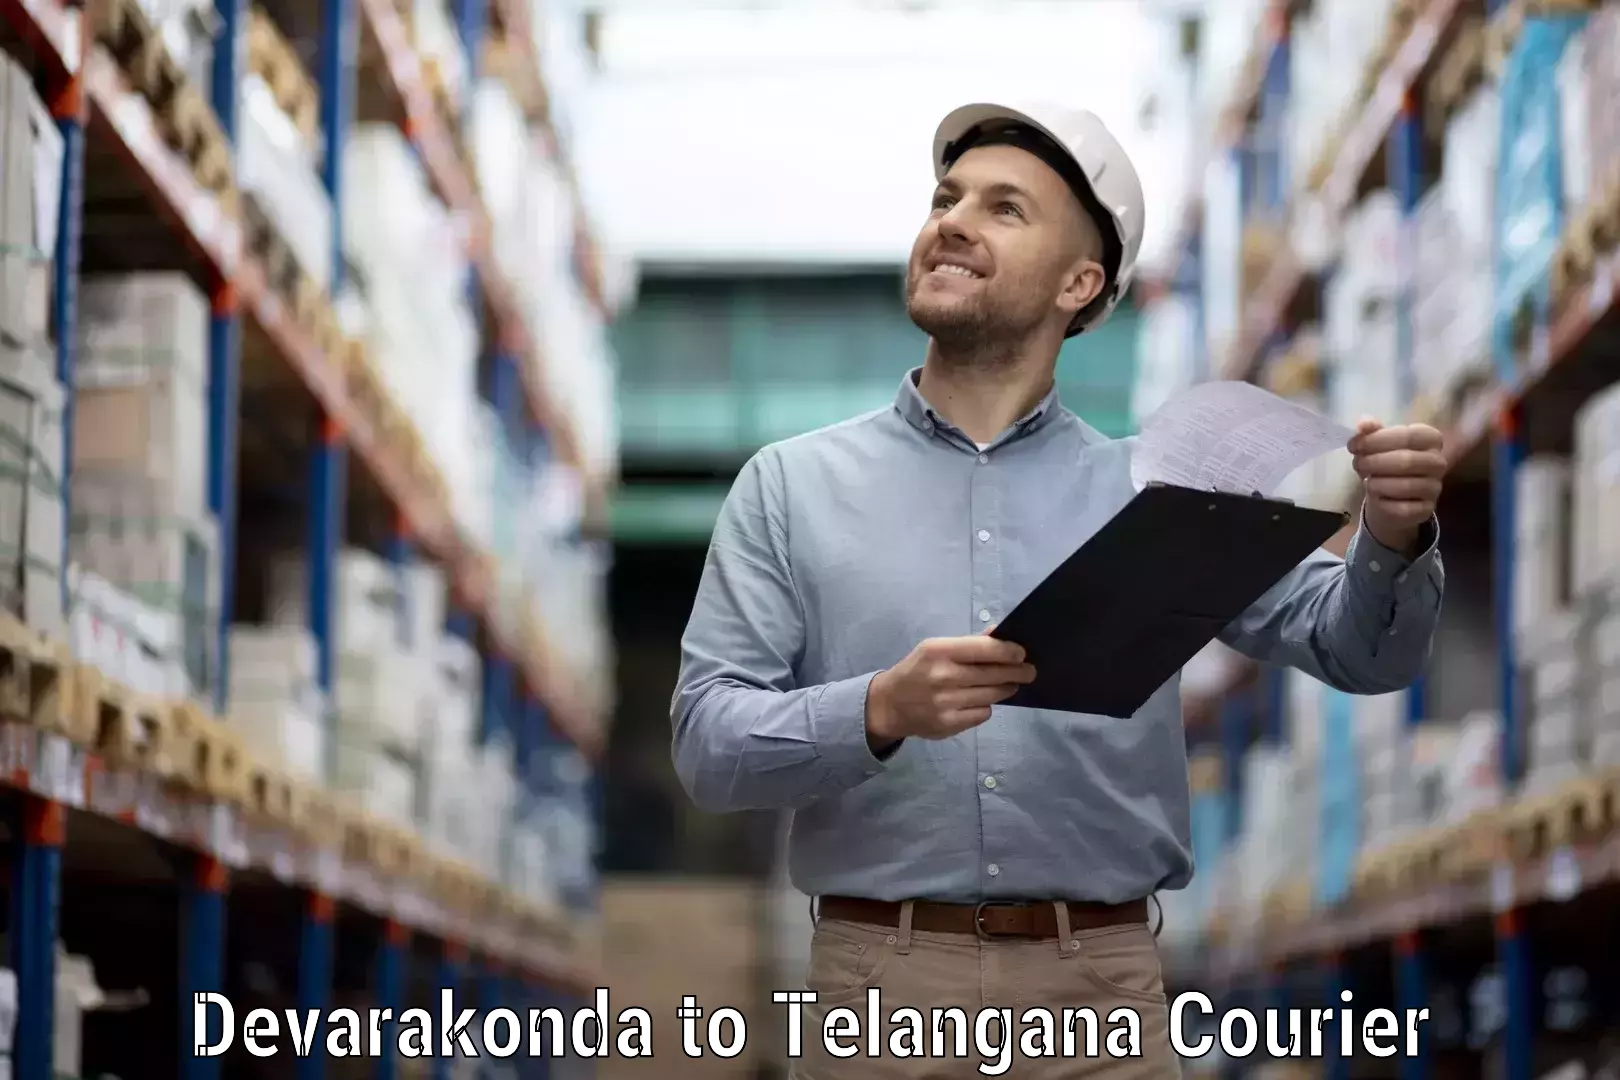 Personalized courier experiences in Devarakonda to Yellareddy